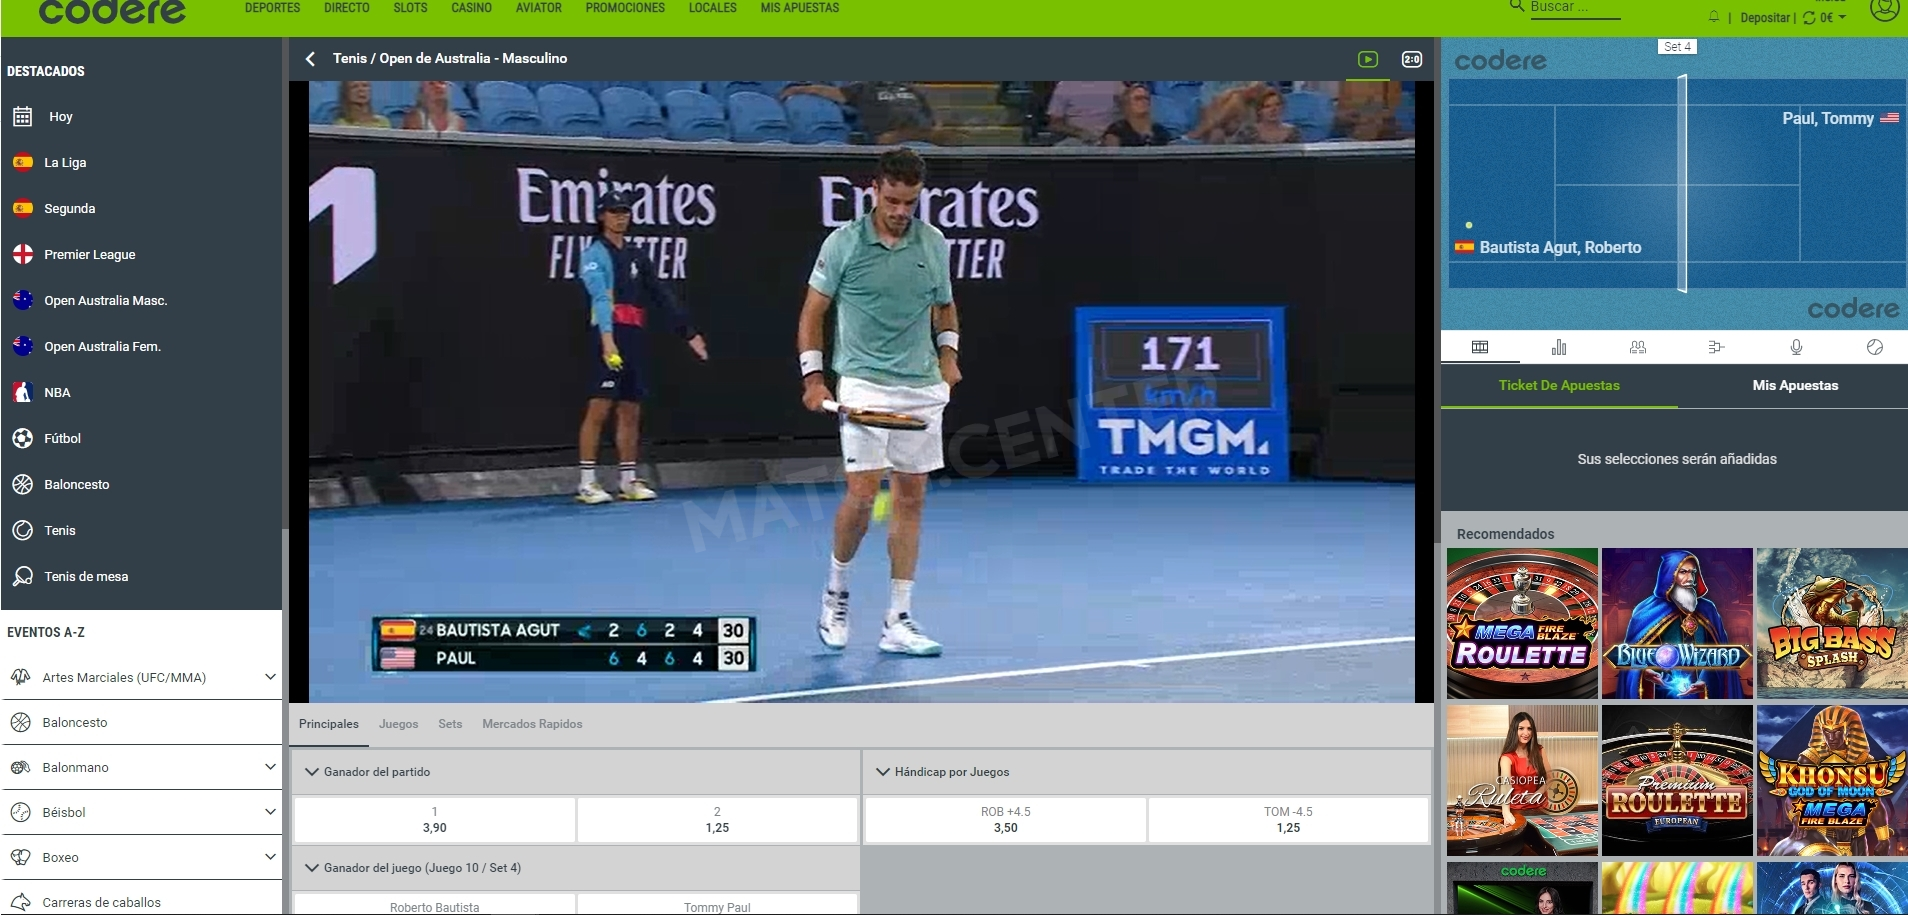 Streaming en vivo Codere - Tenis Open de Australia - Roberto Bautista vs. Tommy Paul